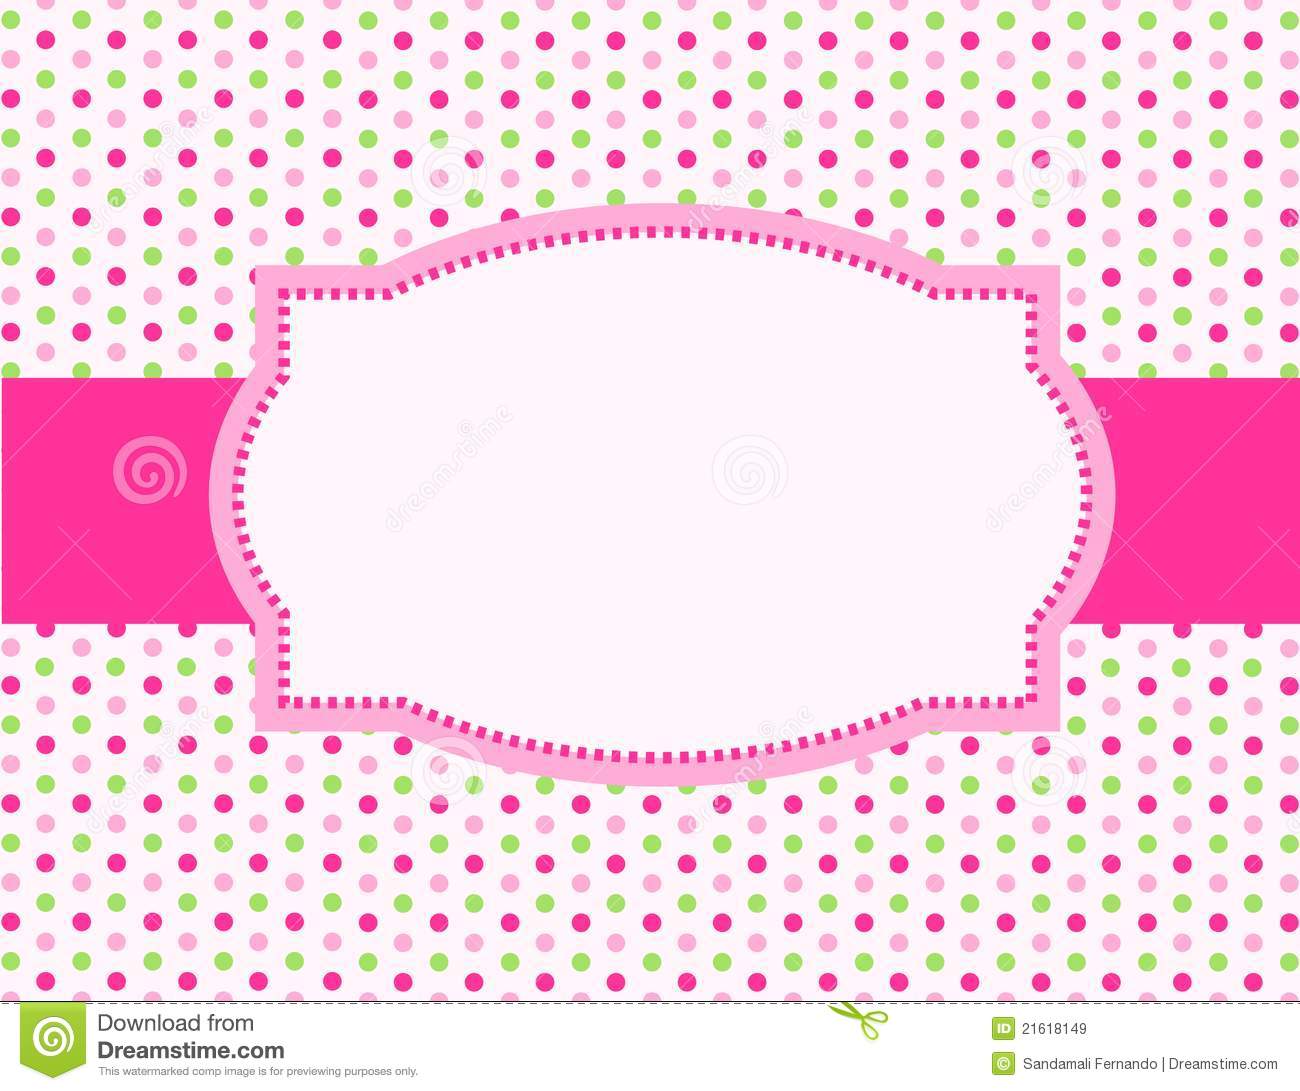 Polka Dot Background Frame Royalty Free Stock Images   Image  21618149